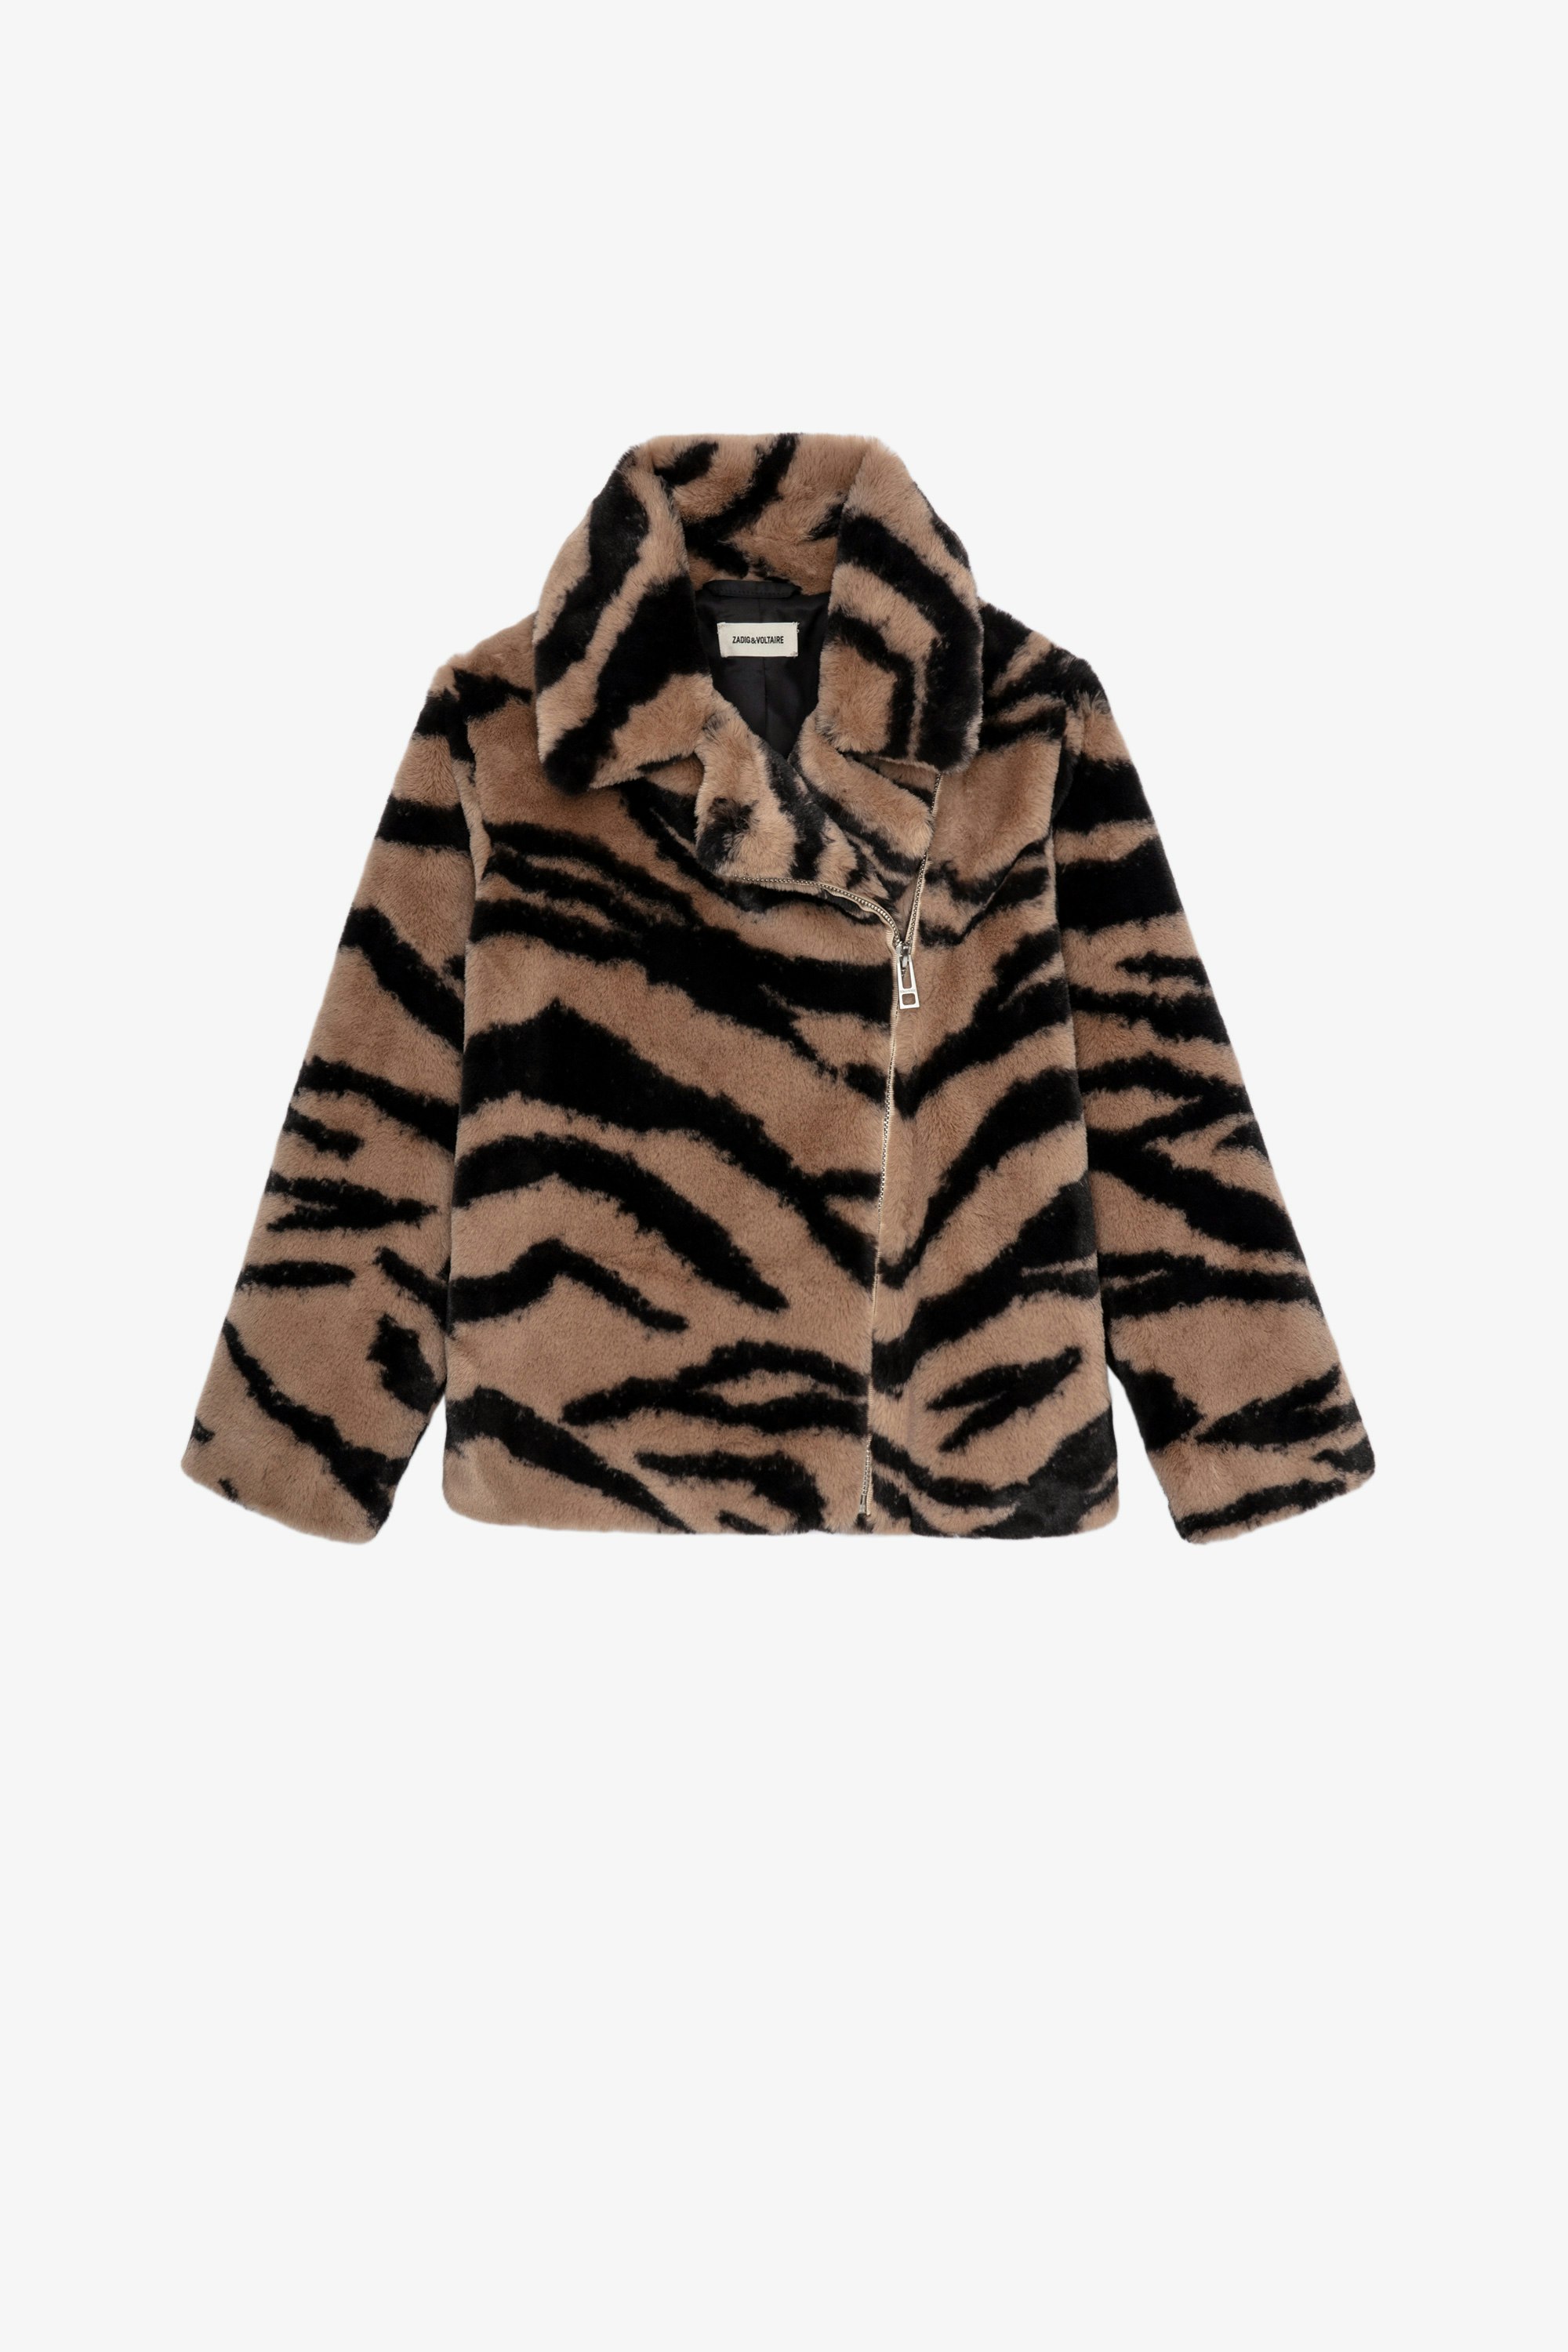 Madeleine Children’s Coat Children’s leopard-print coat with revered collar and button fastening 